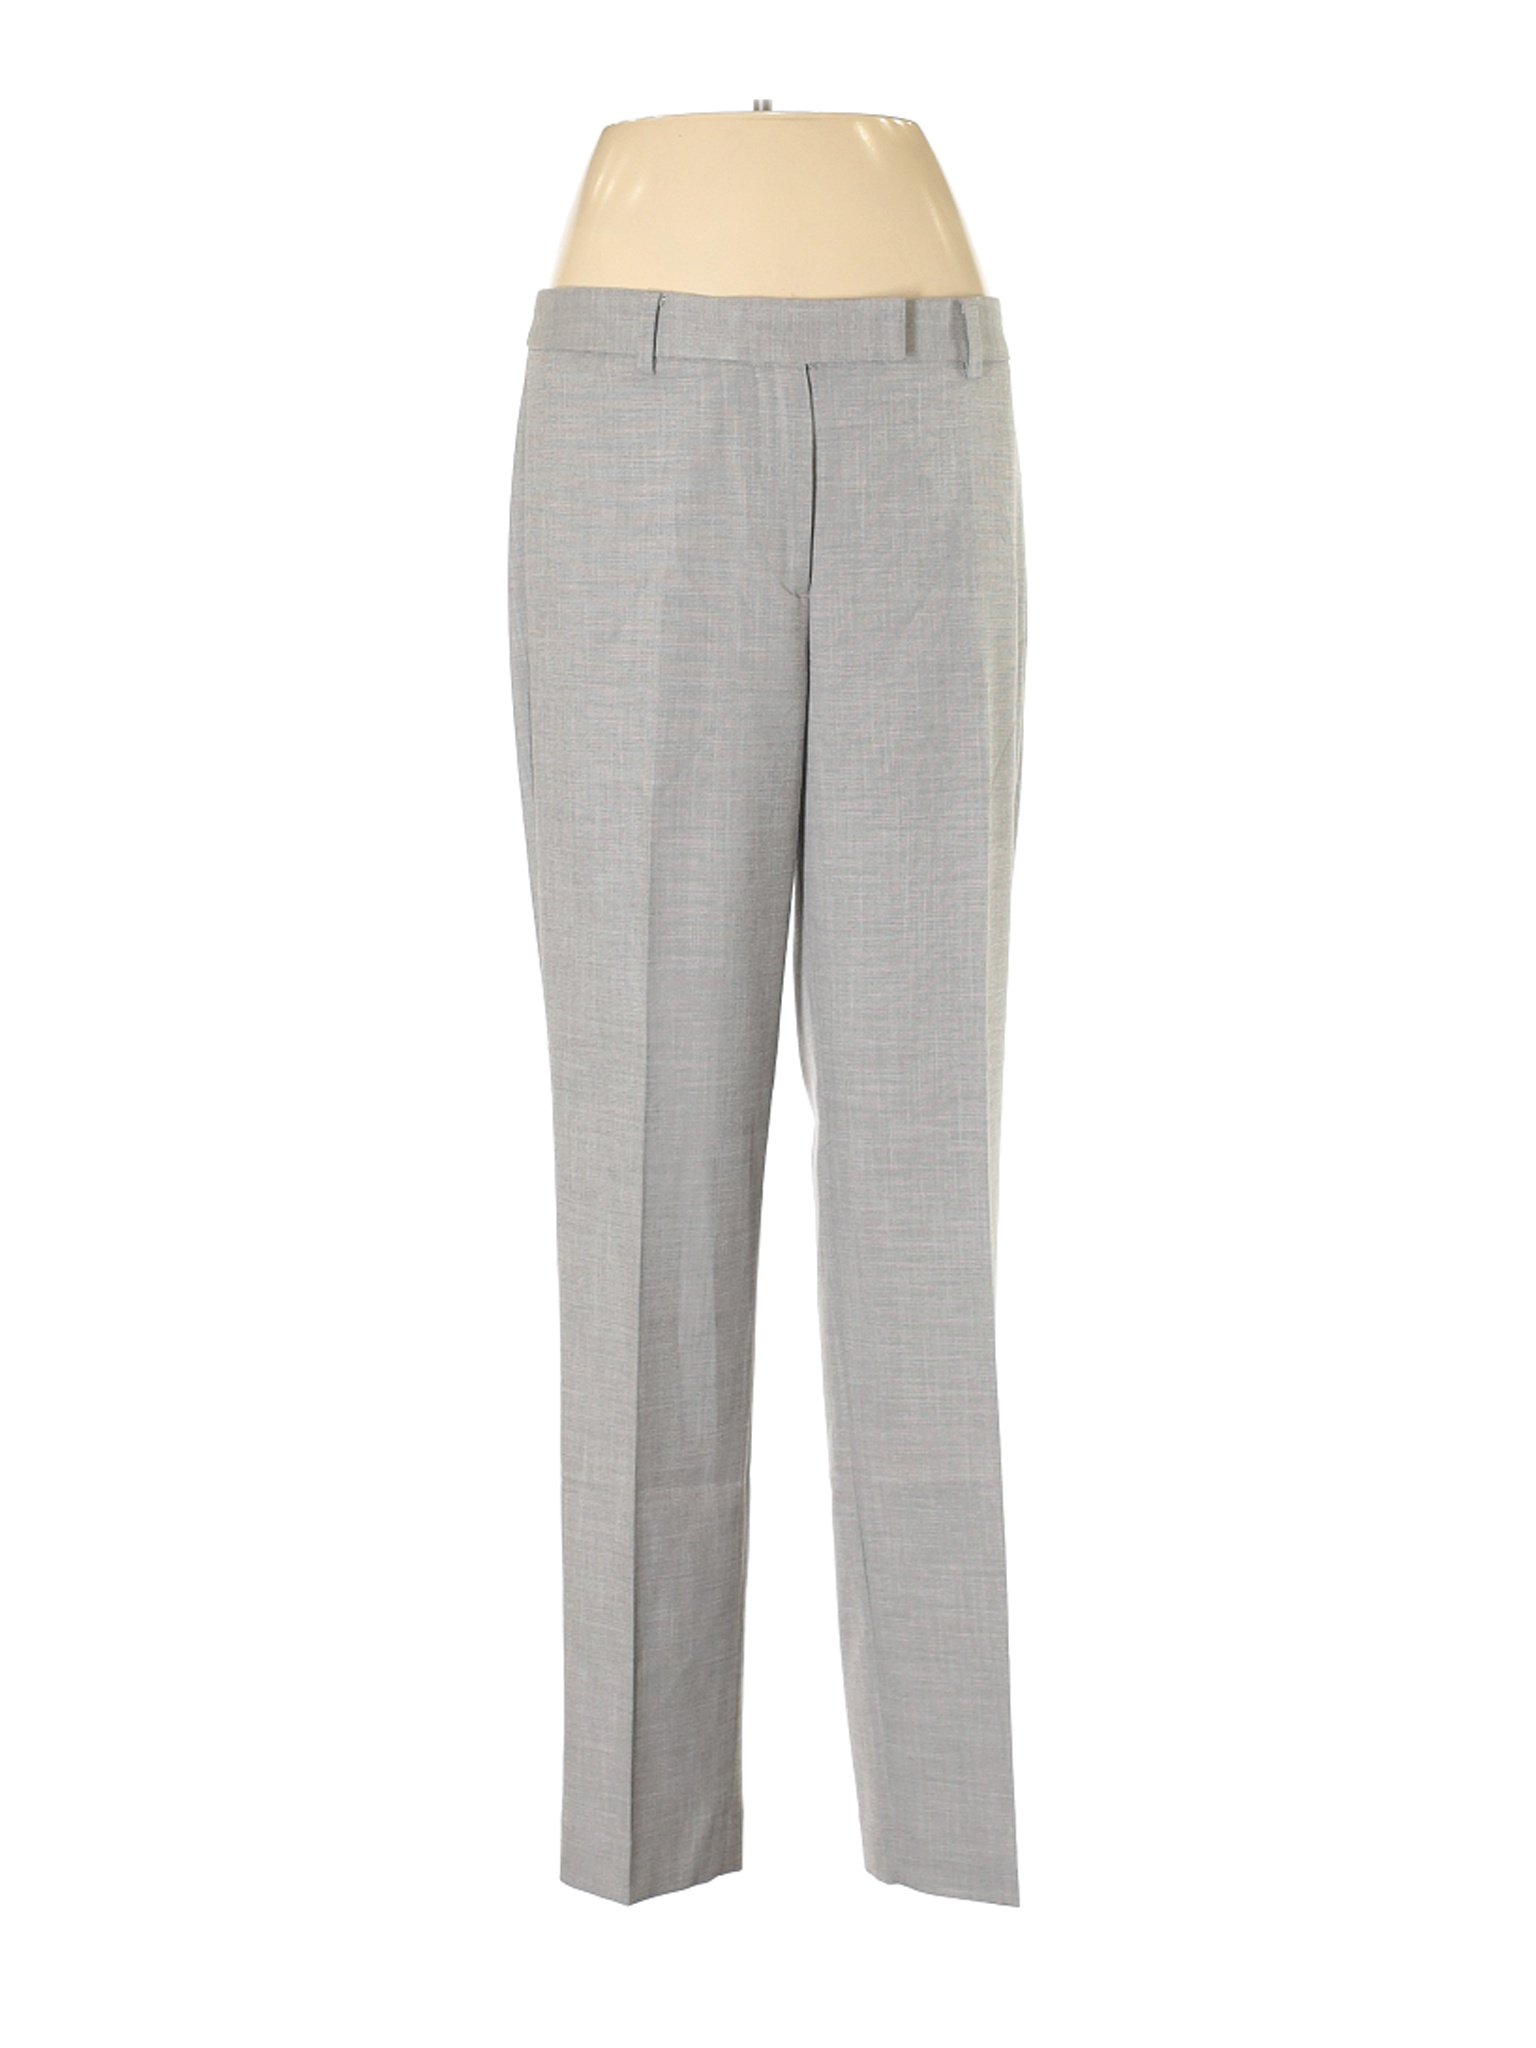 Talbots Women Gray Dress Pants 8 | eBay